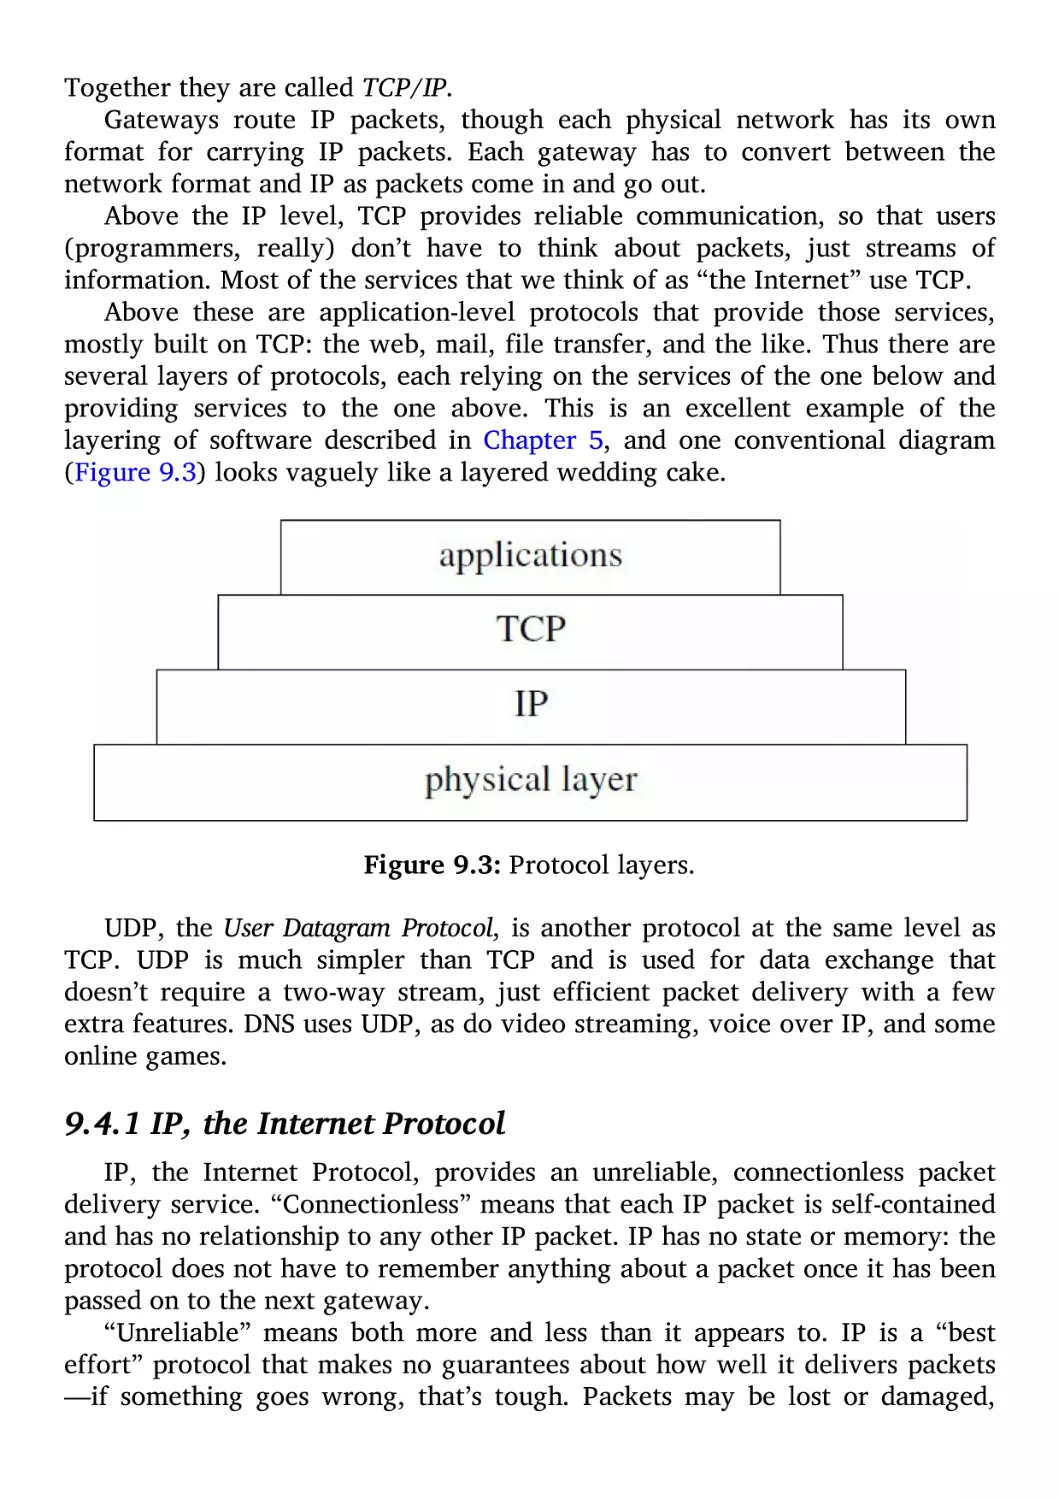 9.4.1 IP, the Internet Protocol